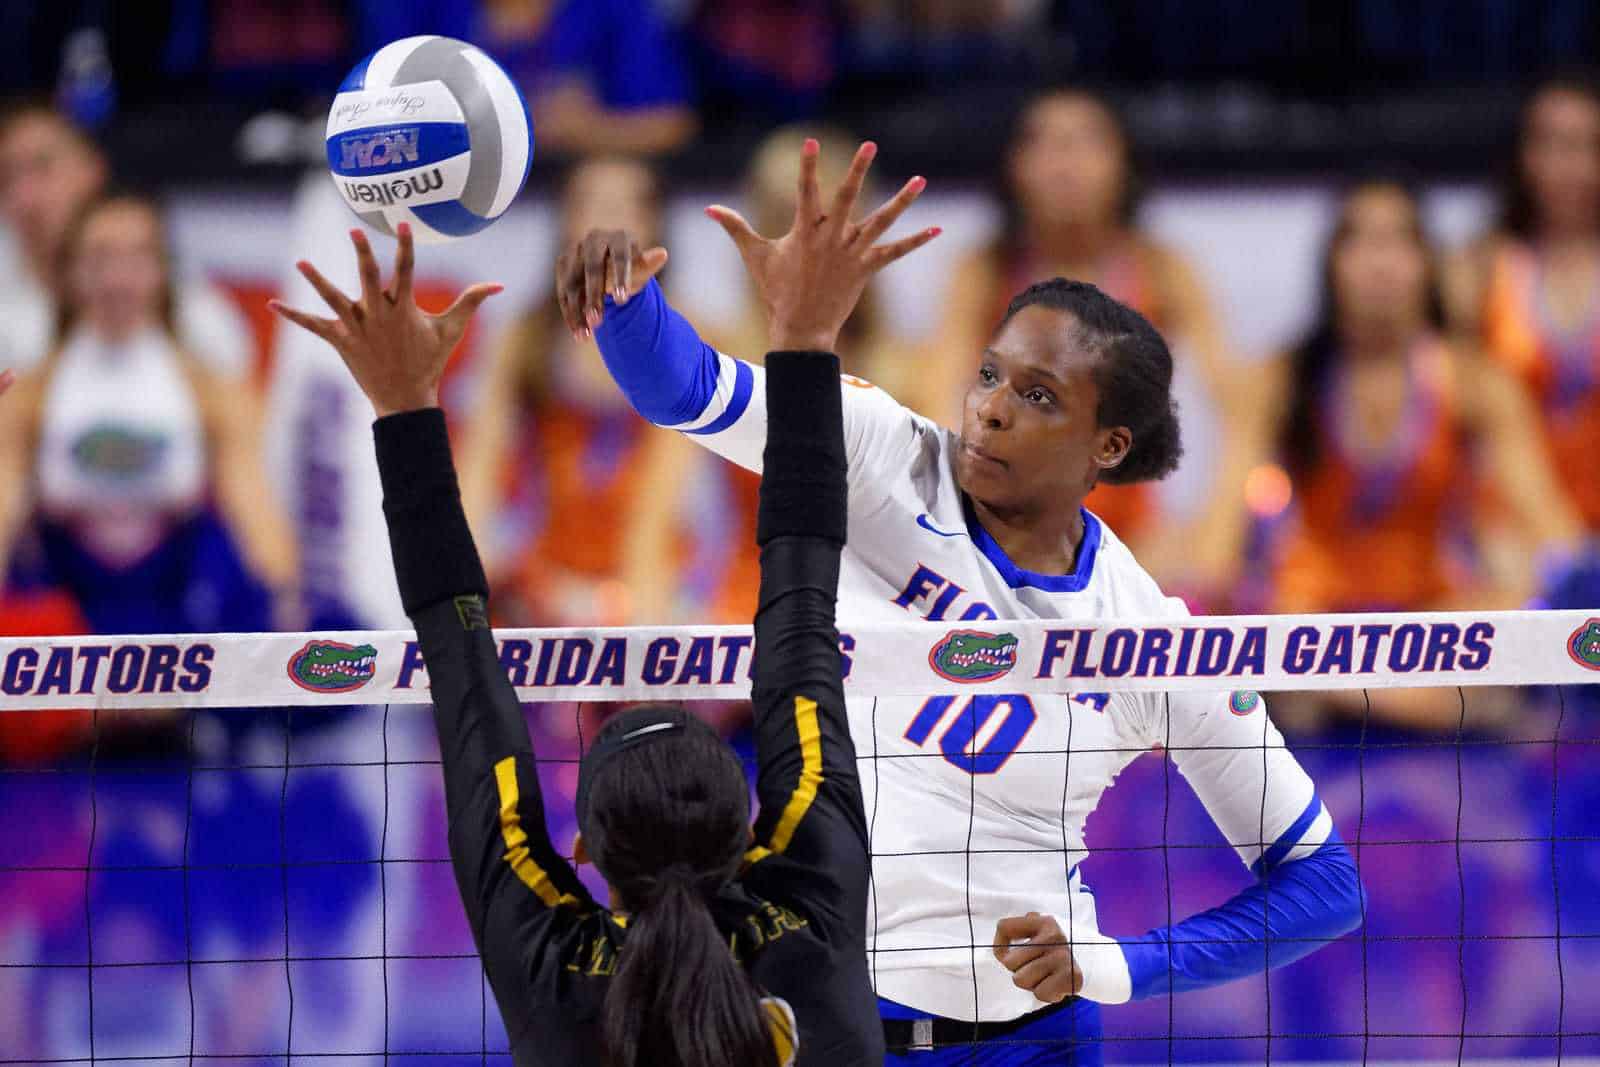 Florida Gators volleyball comes back to Missouri